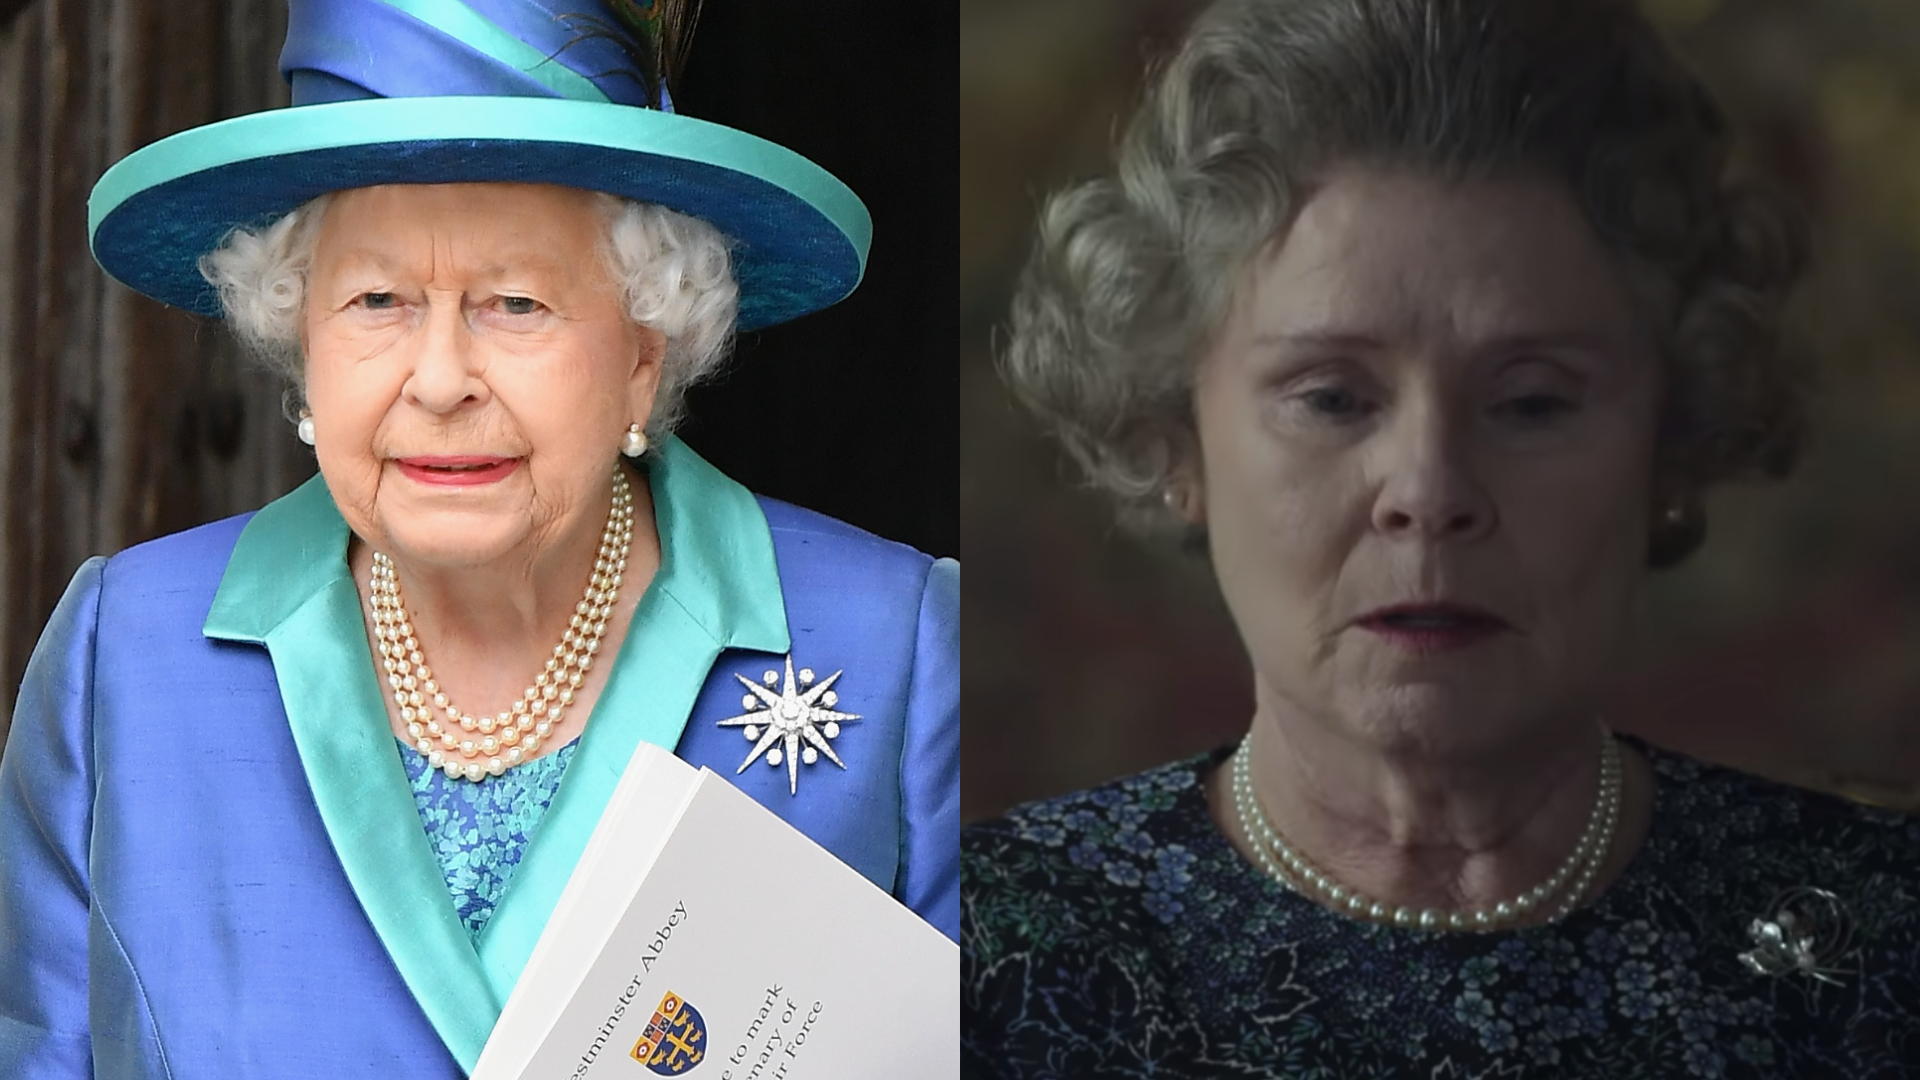 Amiga de longa data da rainha Elizabeth II se revolta com ‘The Crown’, da Netflix: ‘Muita raiva’